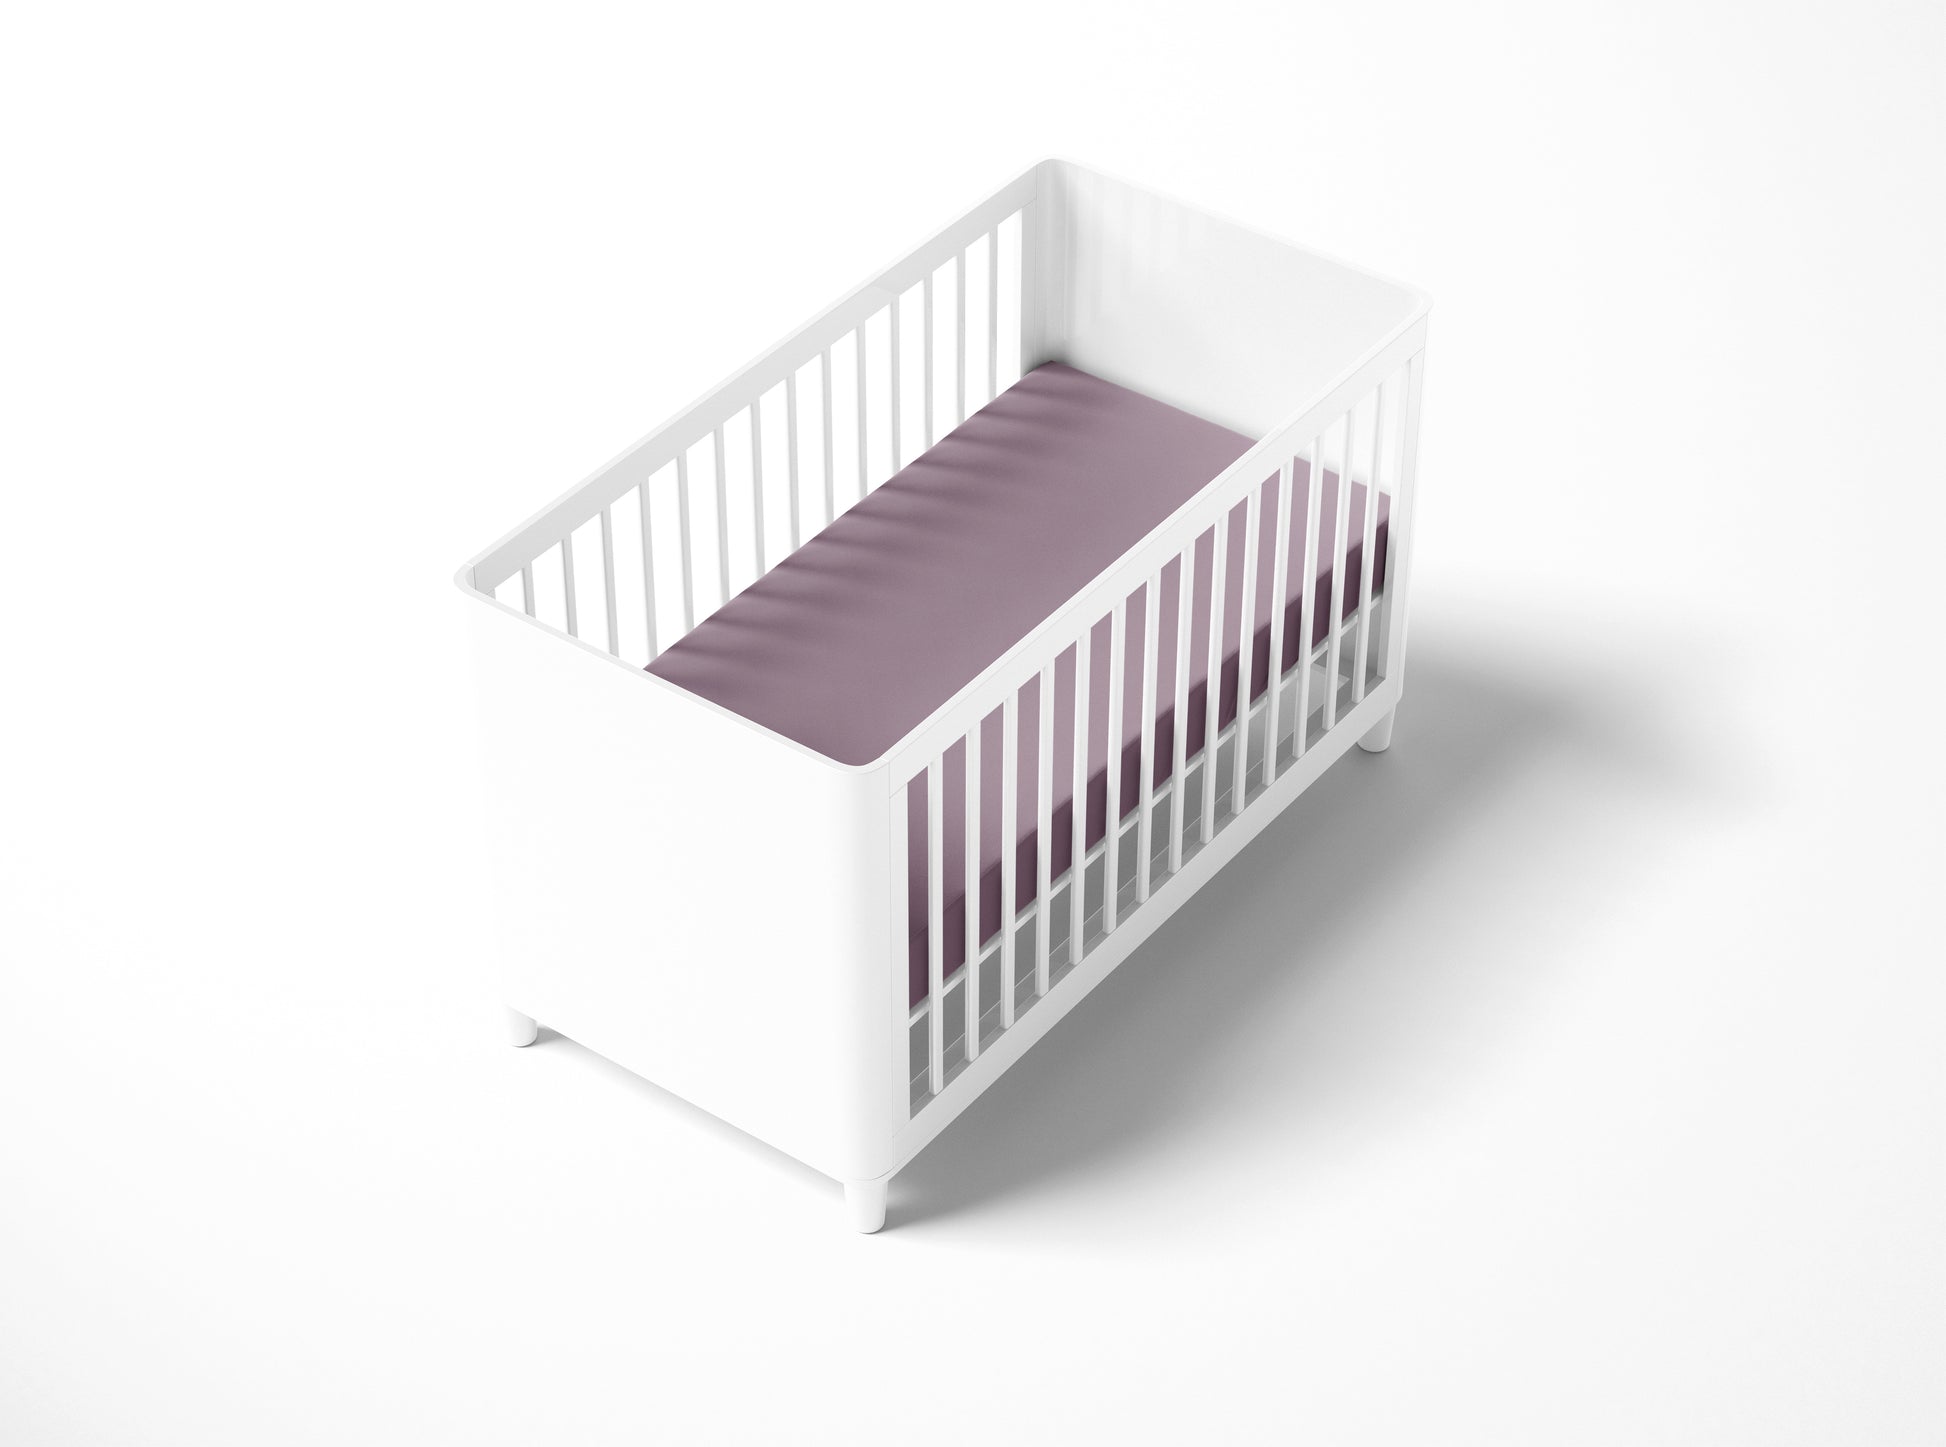 Mini Crib / Pack N Play Sheet | Lavender - One Kind Clothing, LLC